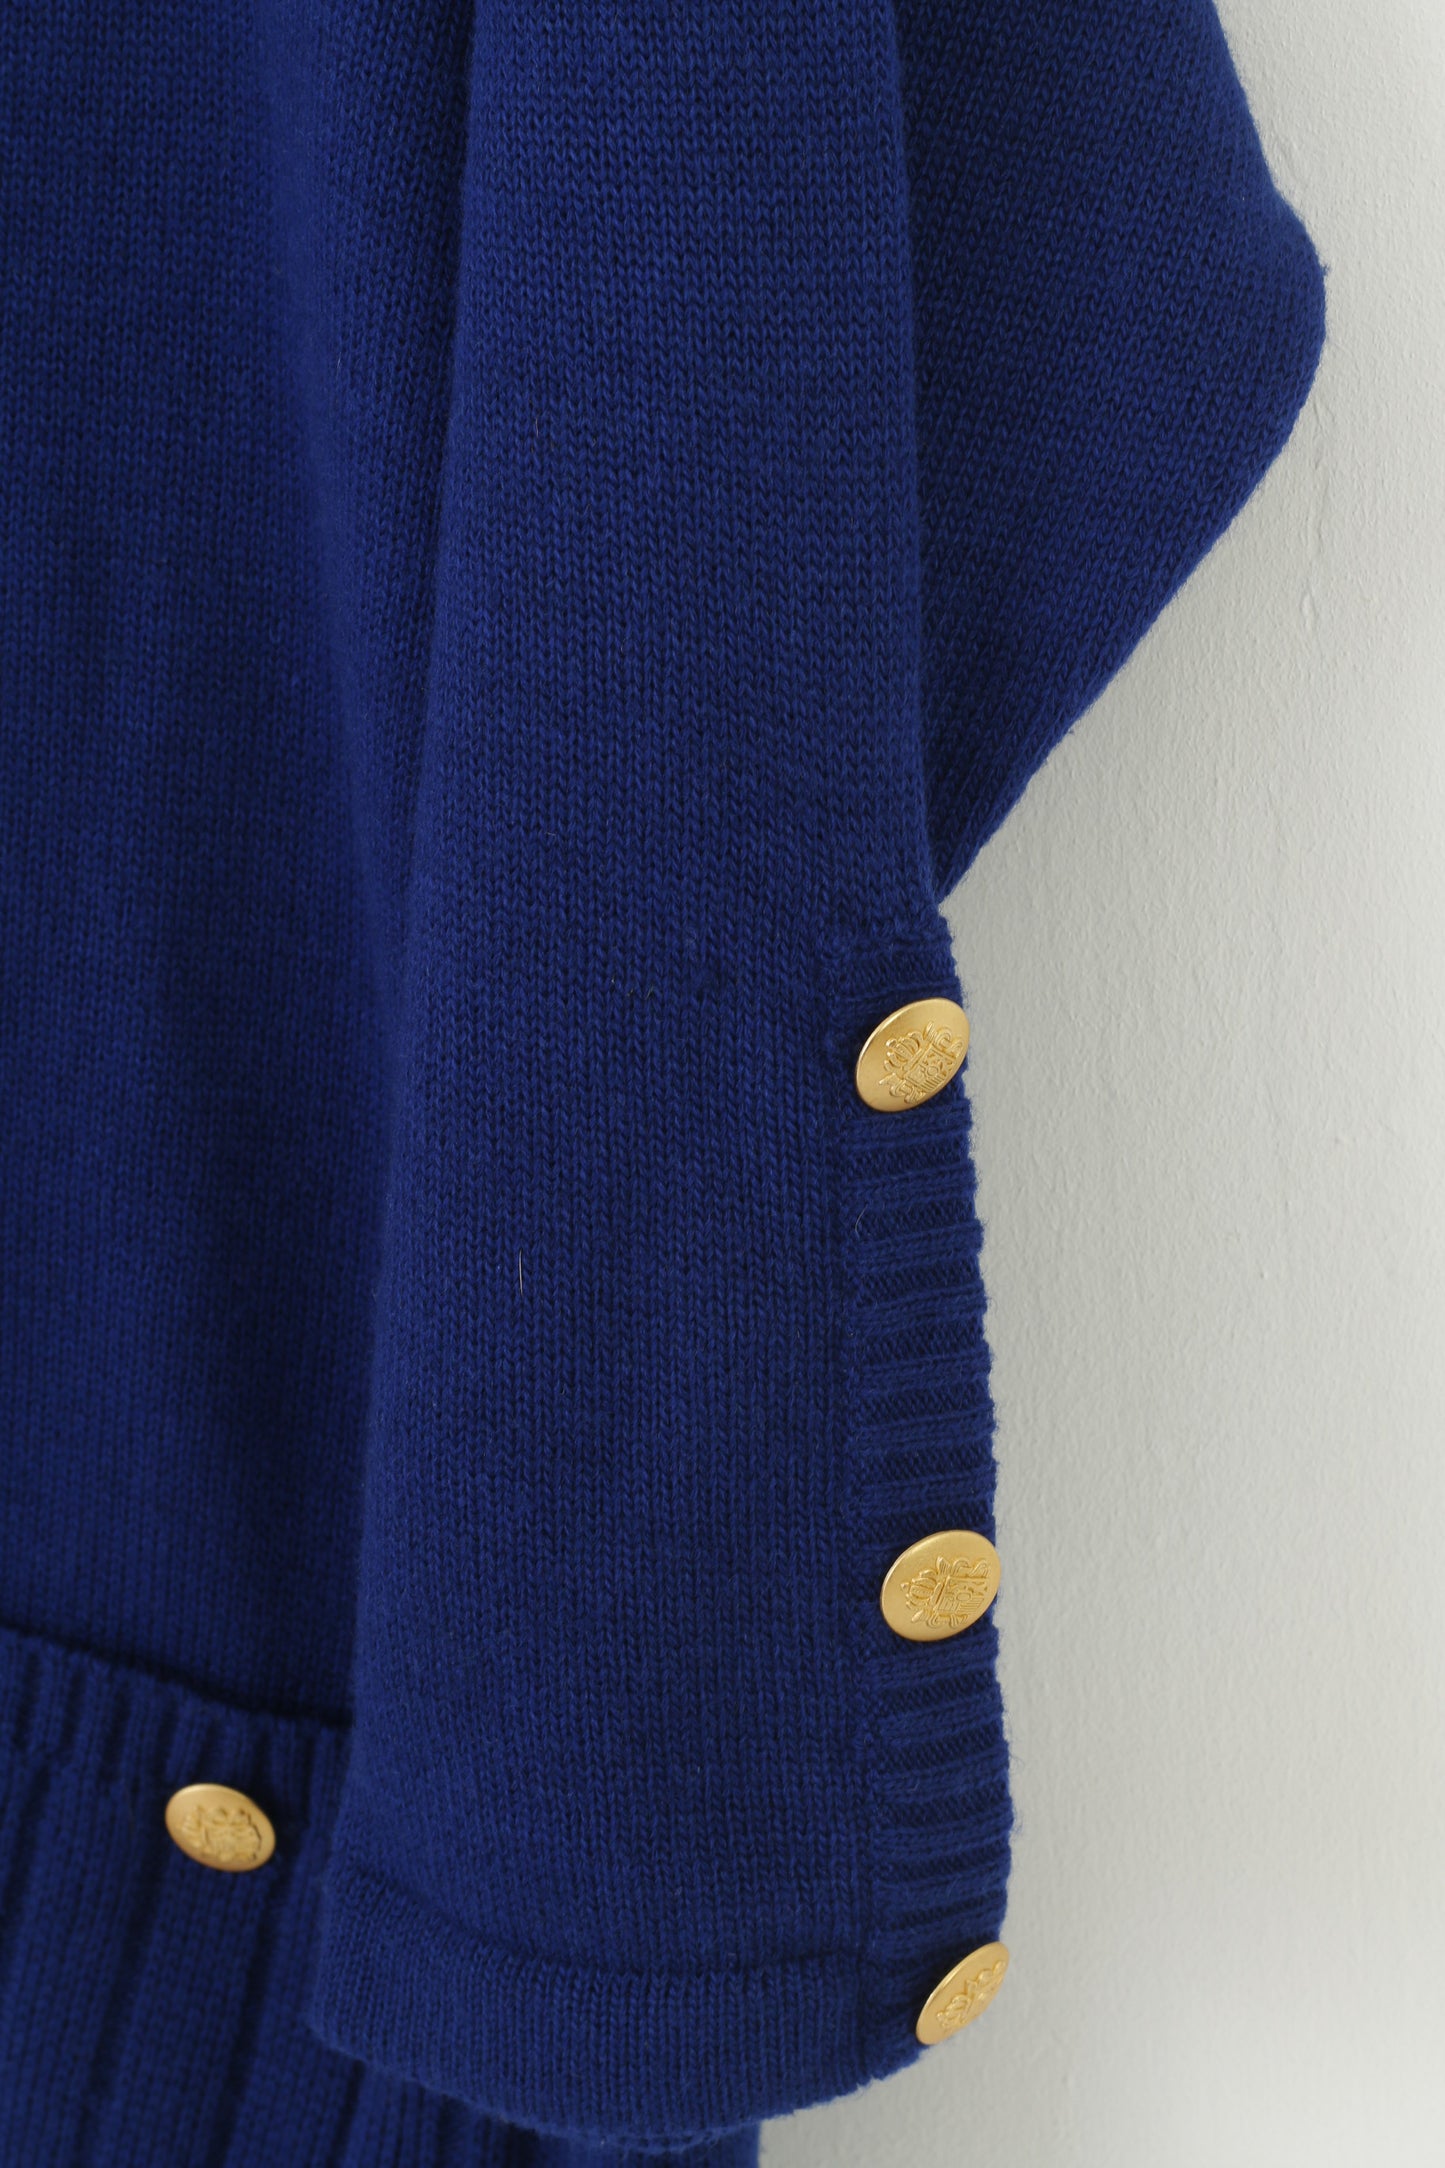 La Belle Women 12 L Jumper Cardigan Blue Gold Buttons Wool Italy Vintage Creation Top